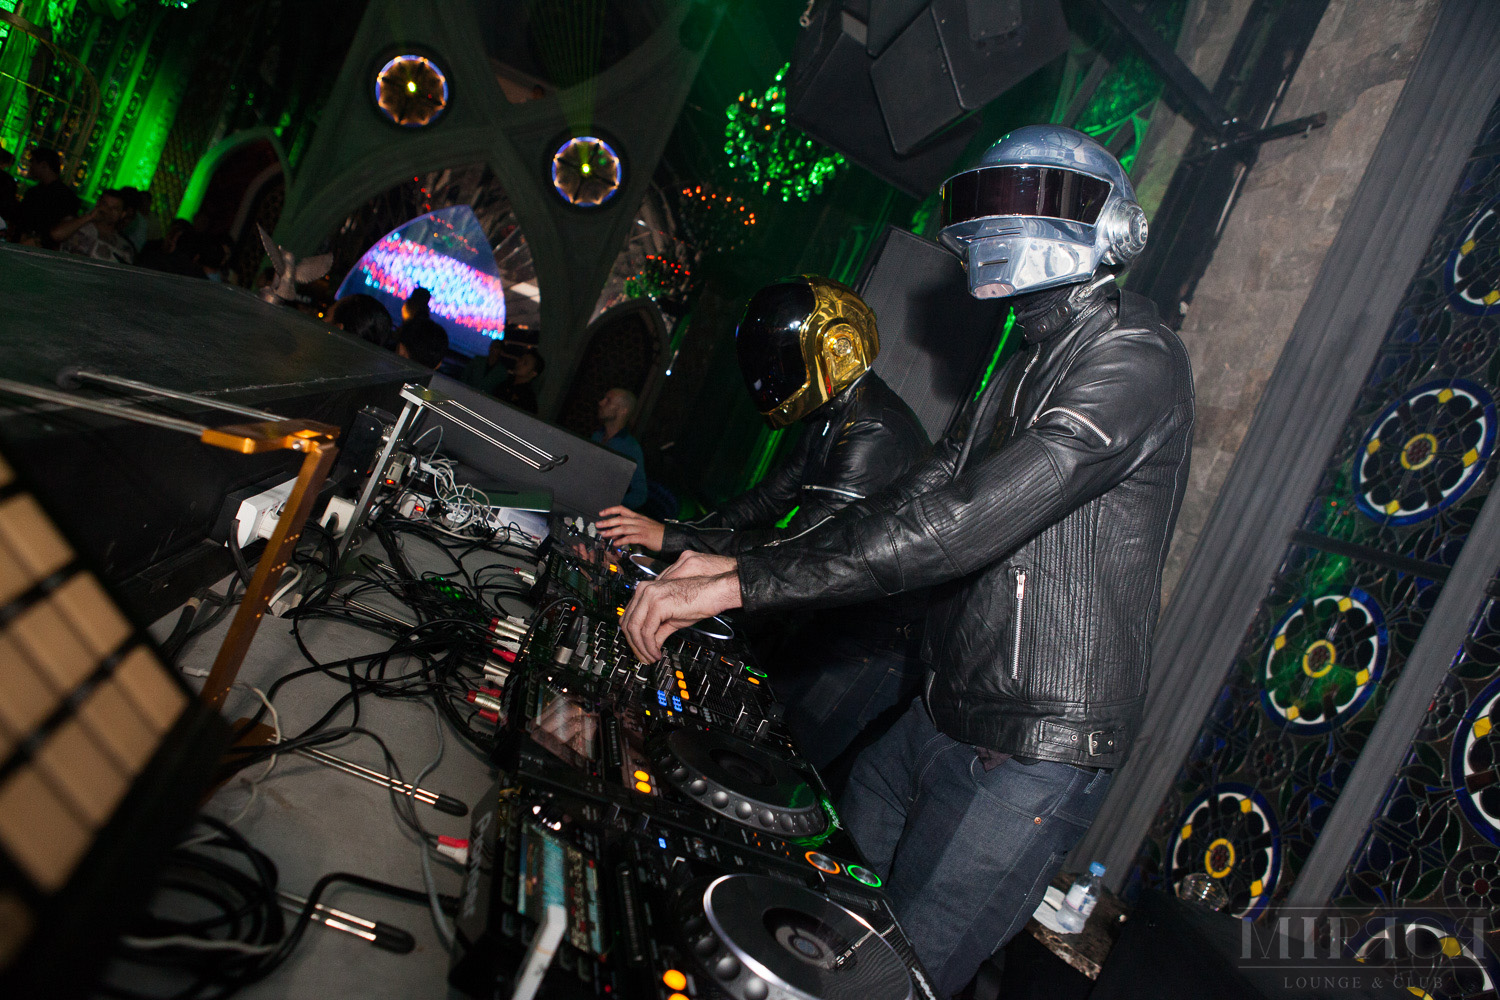 056_Daft Punk Tribute @Mirror 2014-12-04